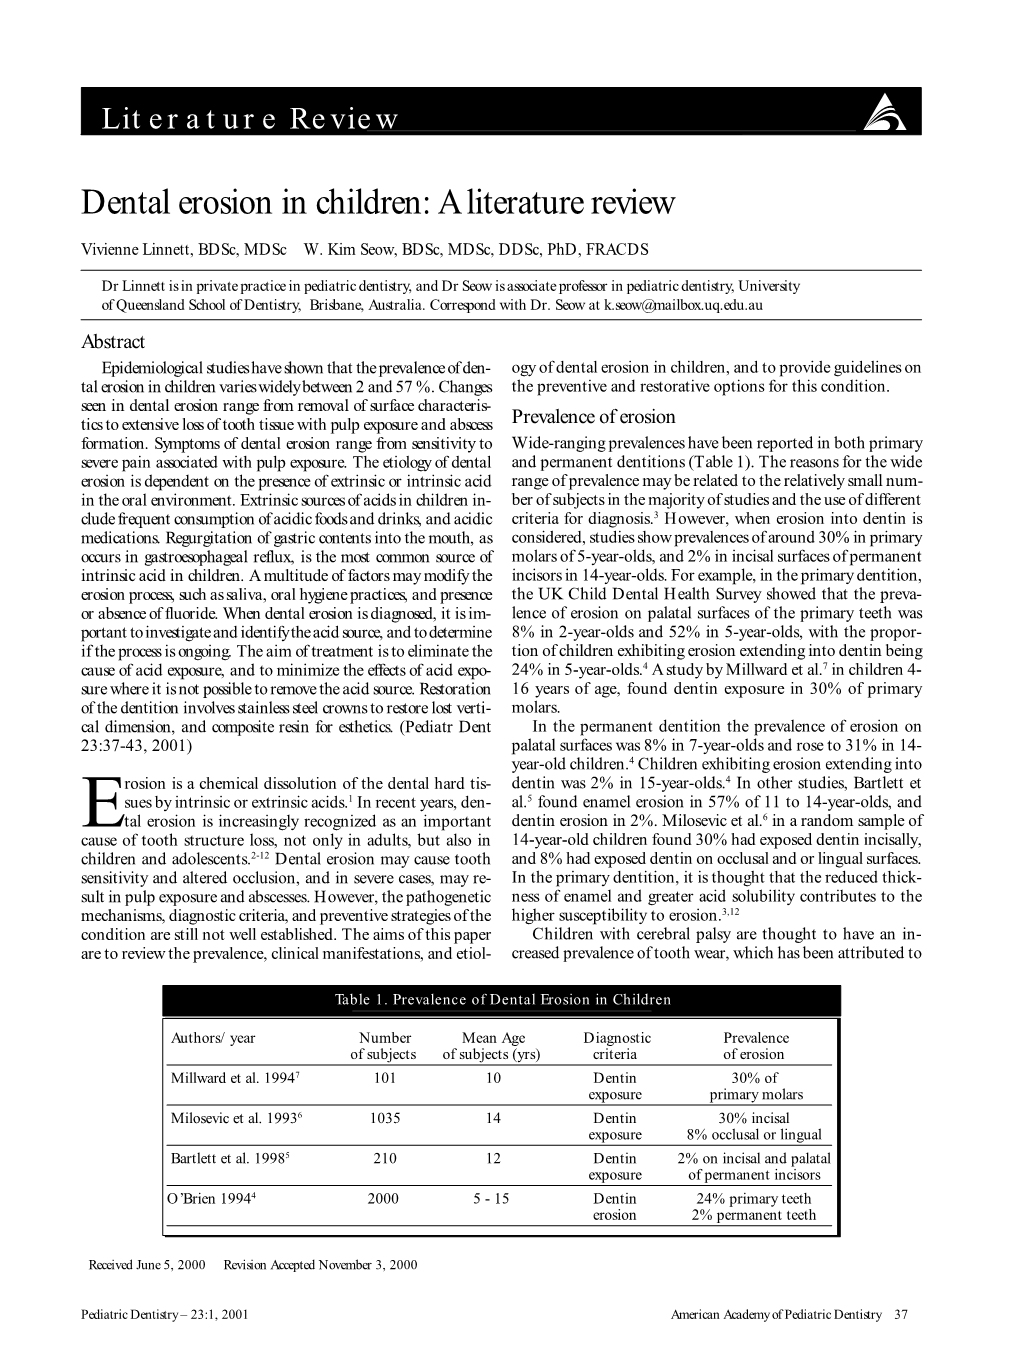 Dental Erosion in Children: a Literature Review